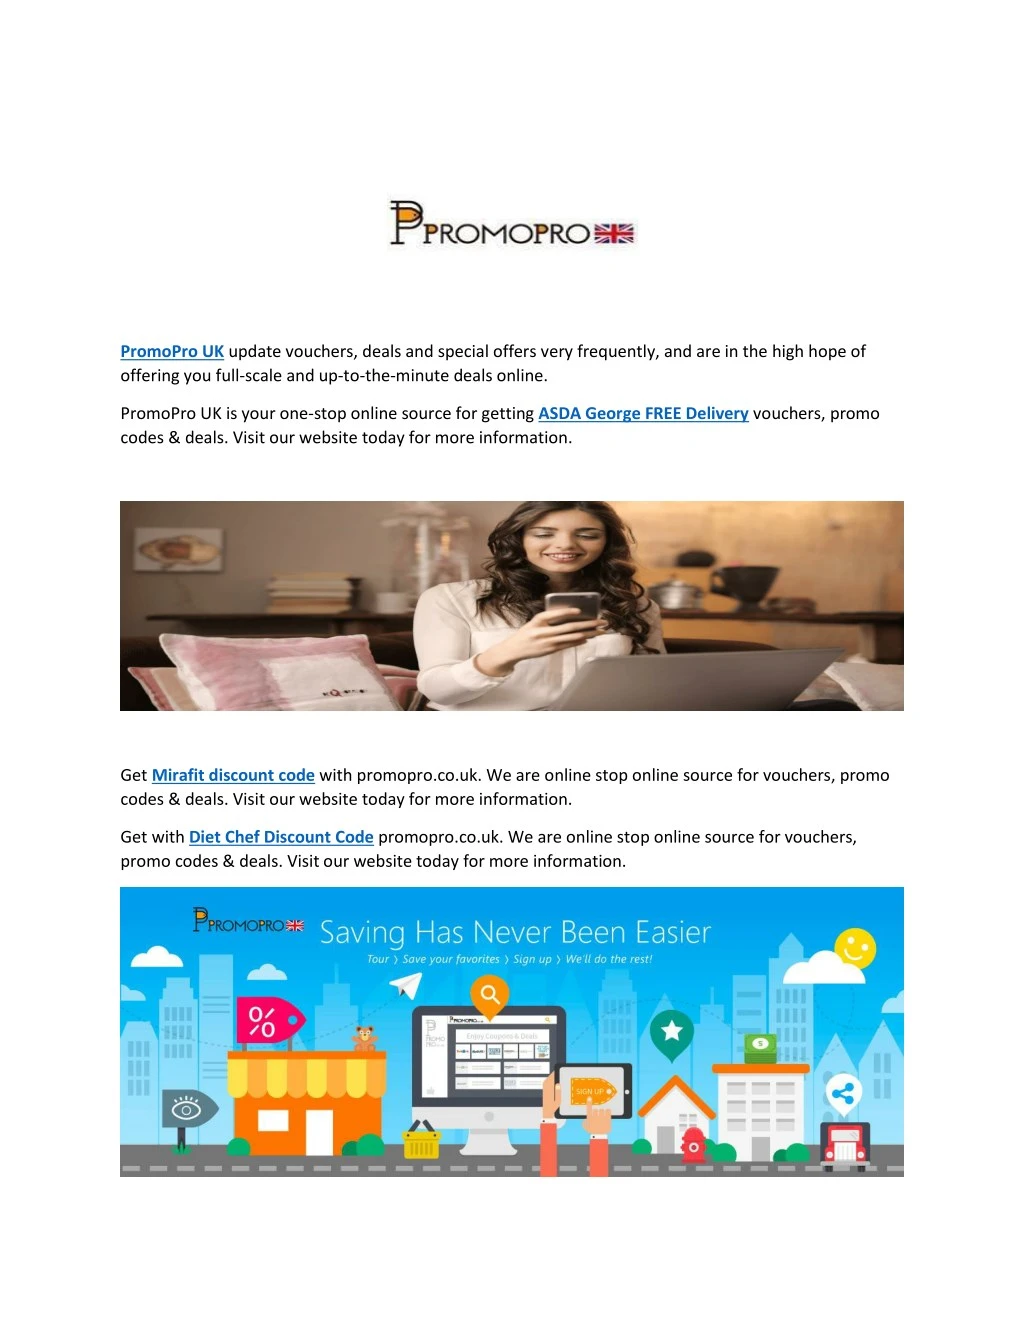 promopro uk update vouchers deals and special